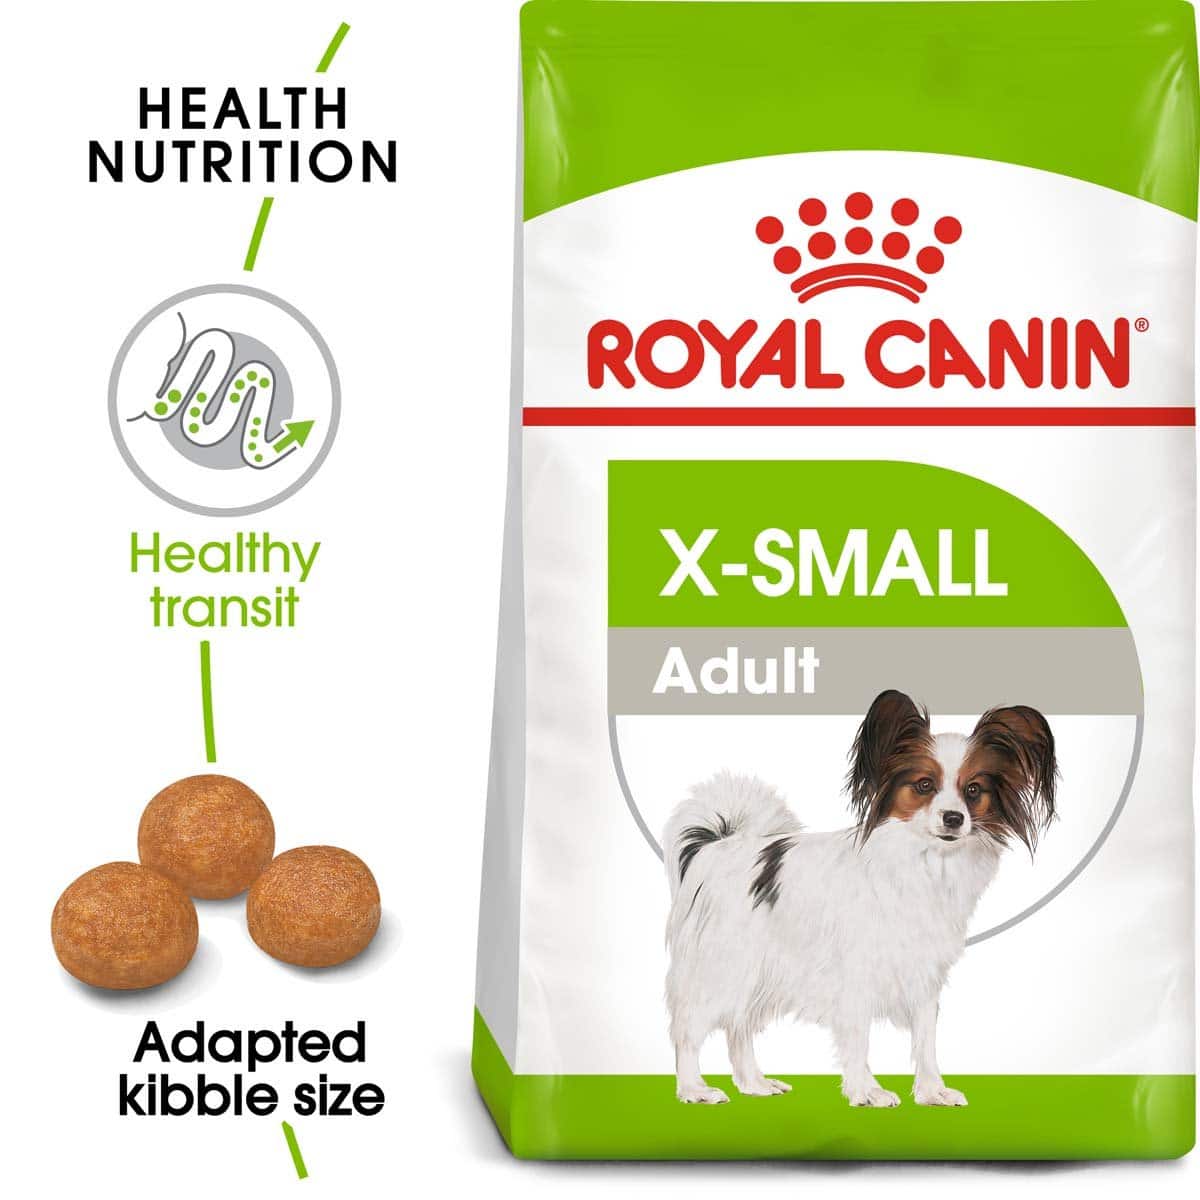 ROYAL CANIN X-SMALL Adult Trockenfutter für sehr kleine Hunde 2x3kg